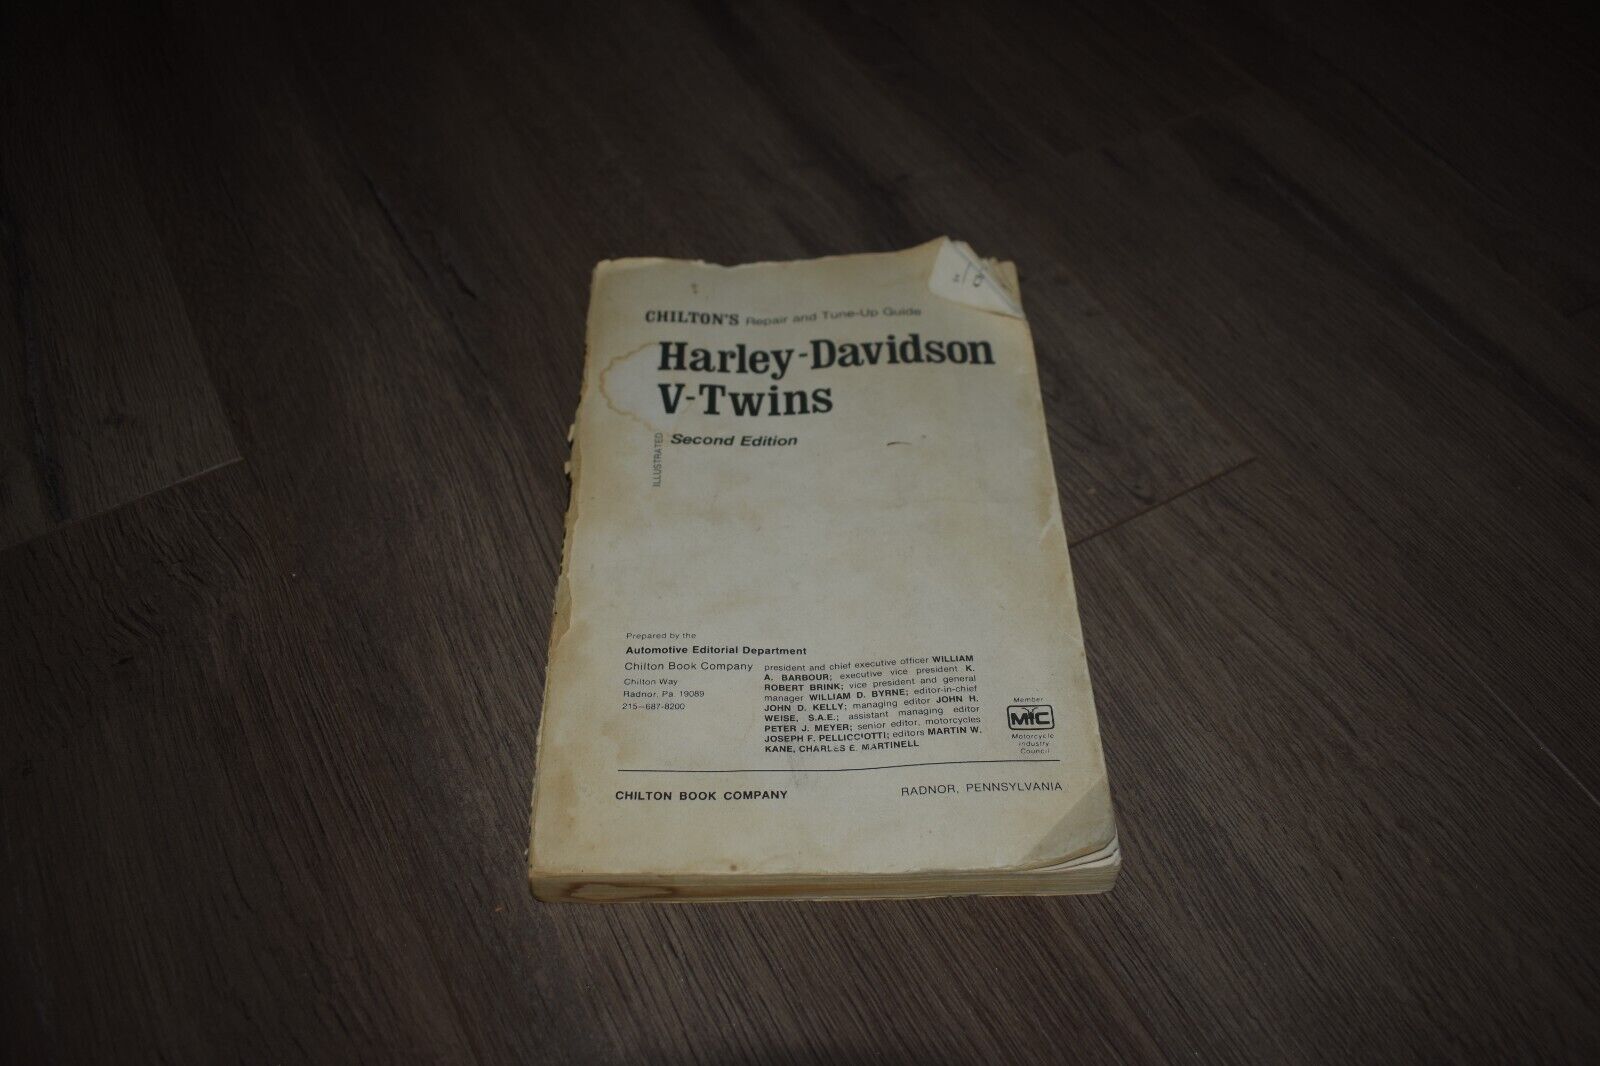 Harley-Davisdon V-Twin repair & tune up guide Chilton\'s 1975 2nd ed NOTE